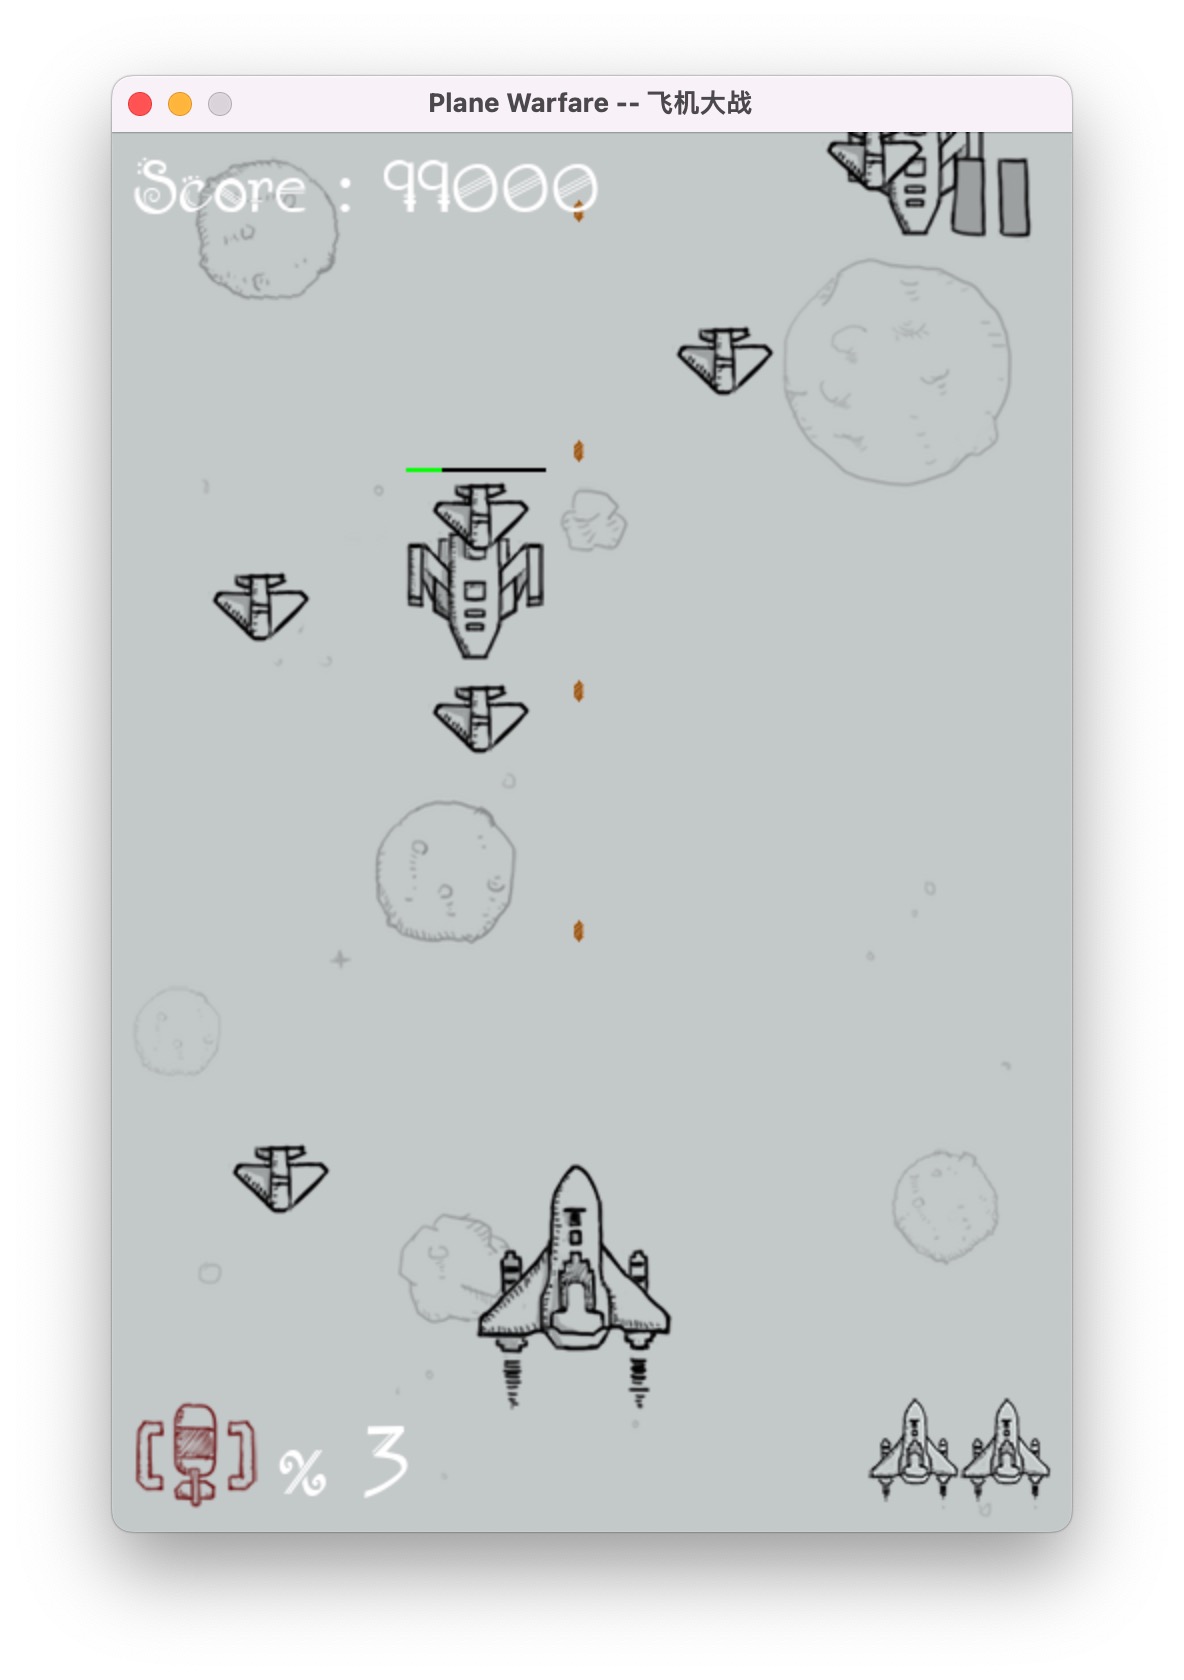 An image of Aircraft Warfare Game